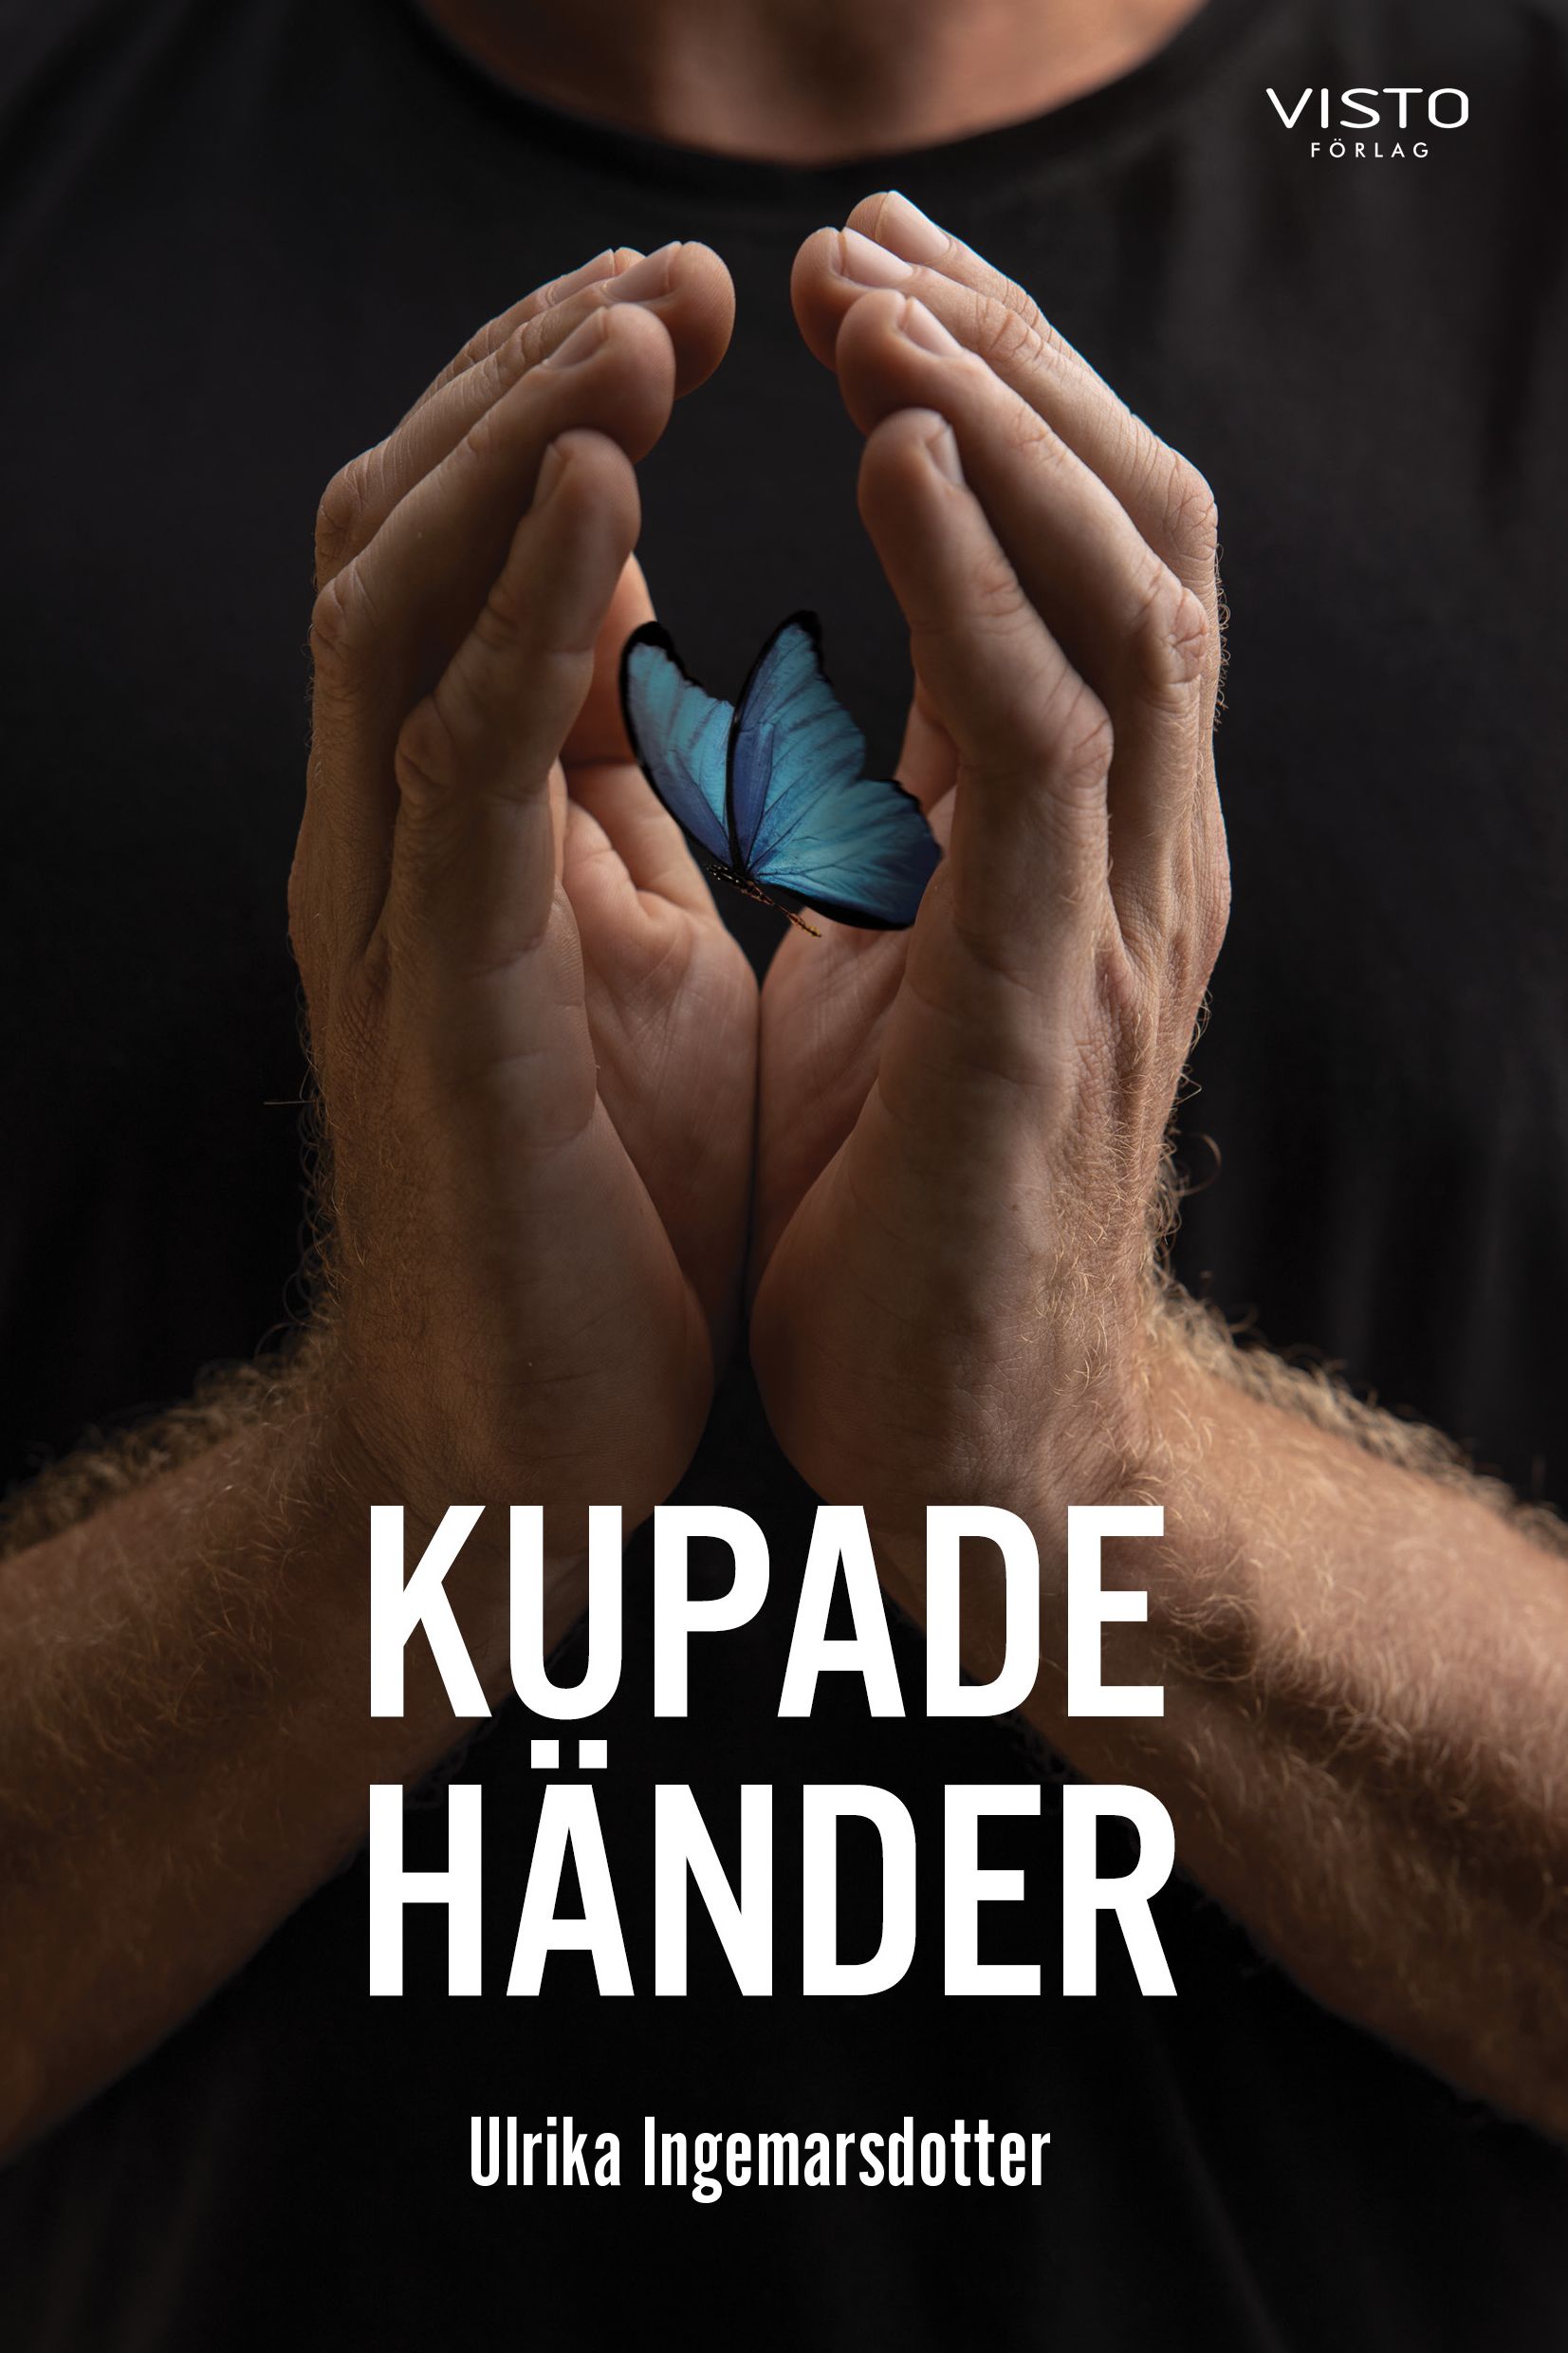 Kupade händer, e-bok av Ulrika Ingemarsdotter